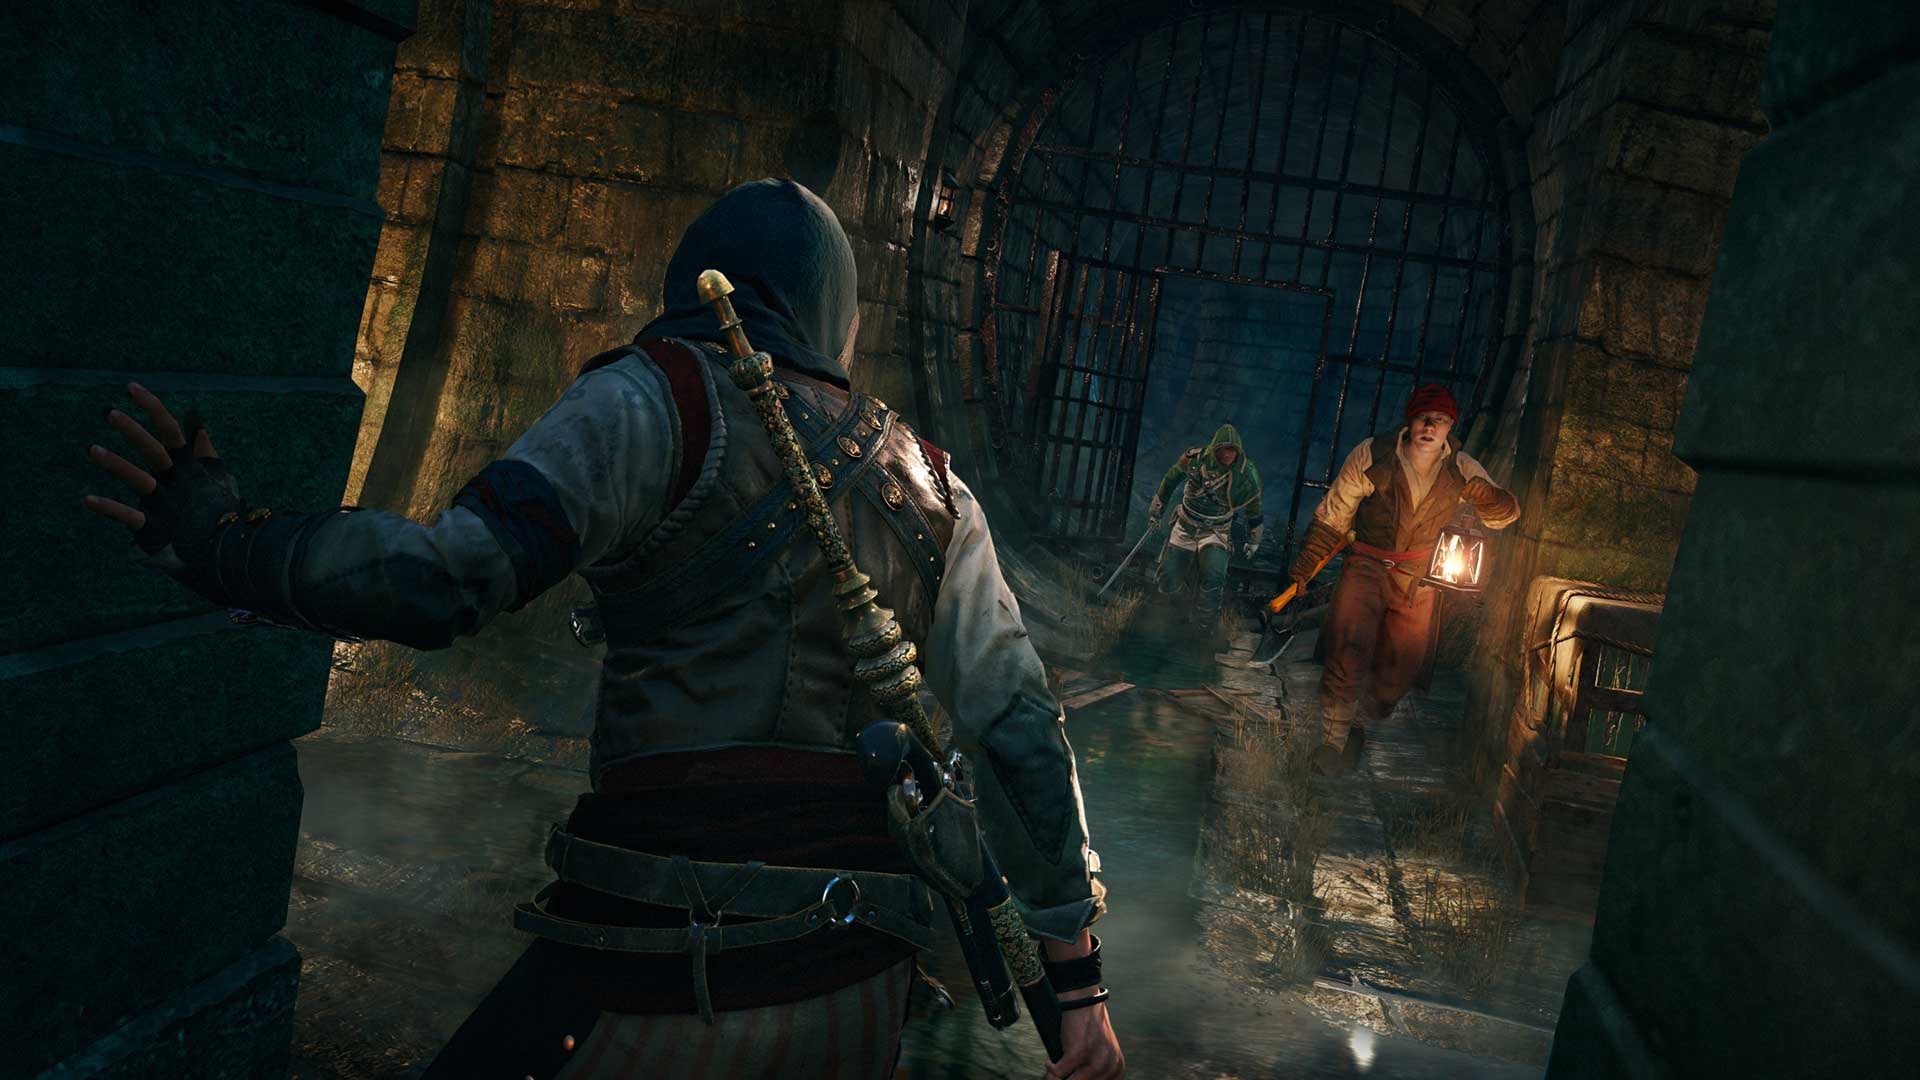 1920x1080 Assassin's Creed Unity - Explore the Catacombs Screenshots